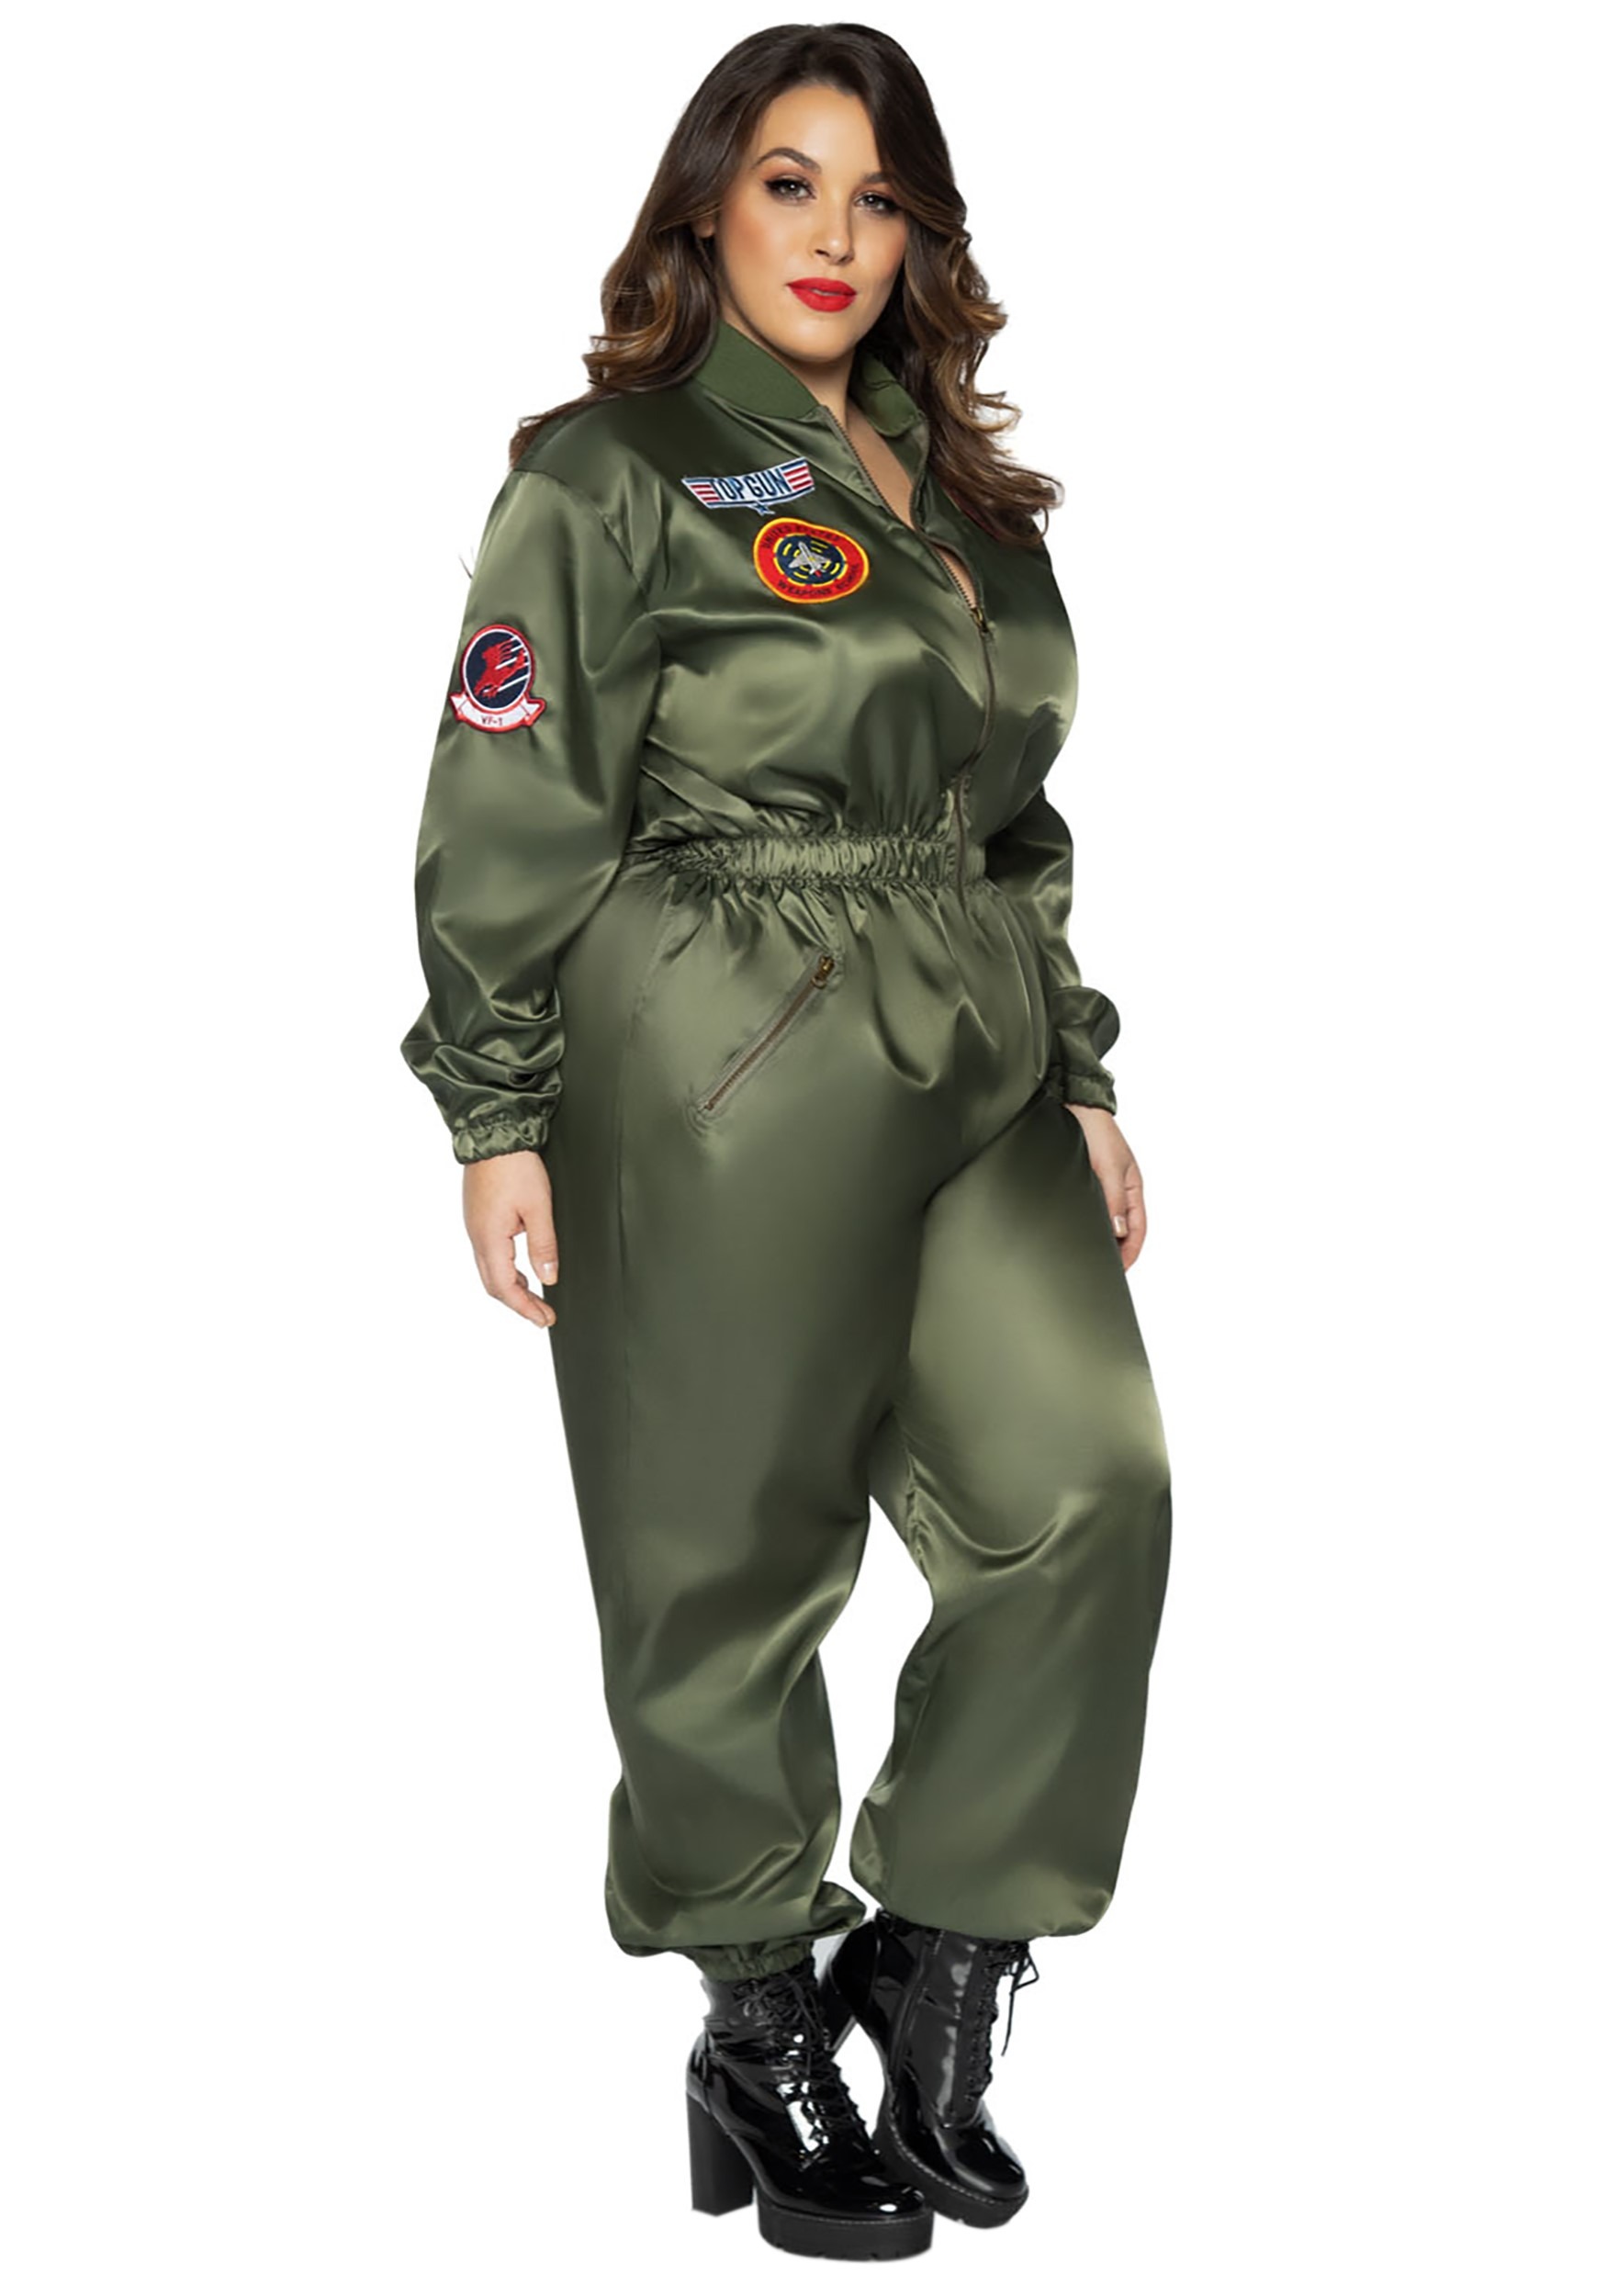 Top Gun Adult's Plus Size Flight Suit Costume